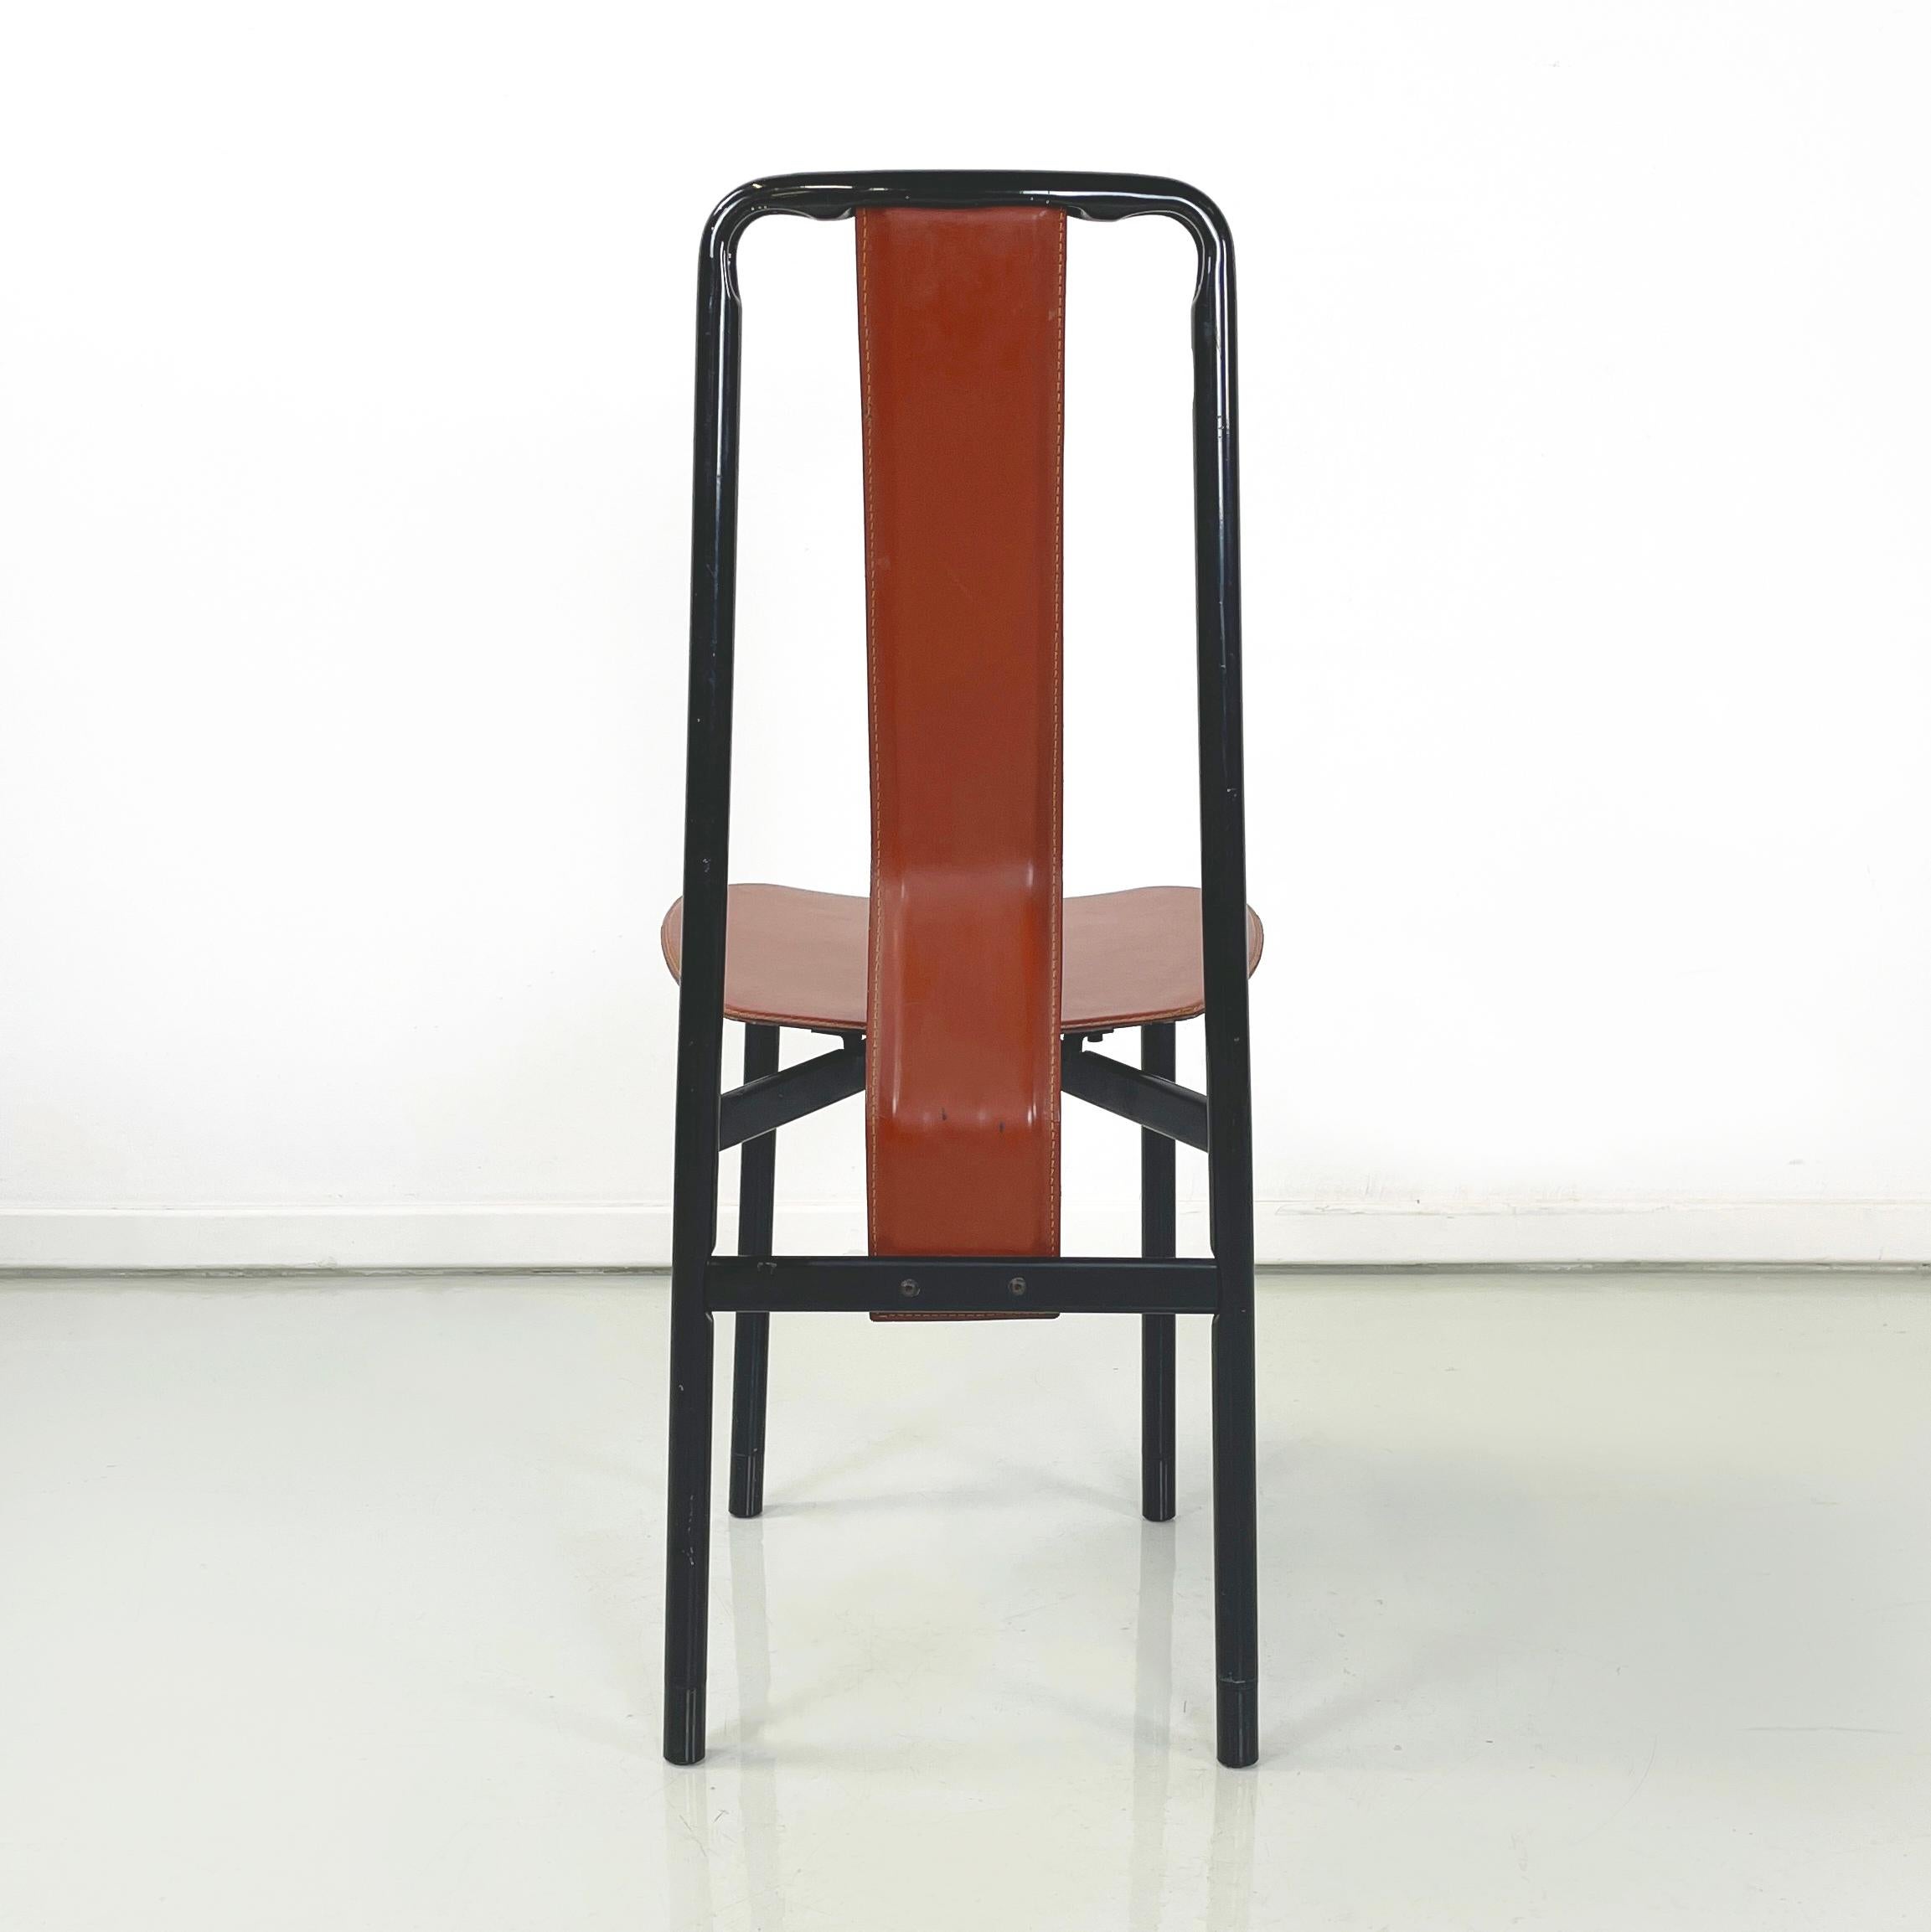 Italian modern Brown leather Chairs Irma by Castiglioni for Zanotta, 1970s For Sale 1